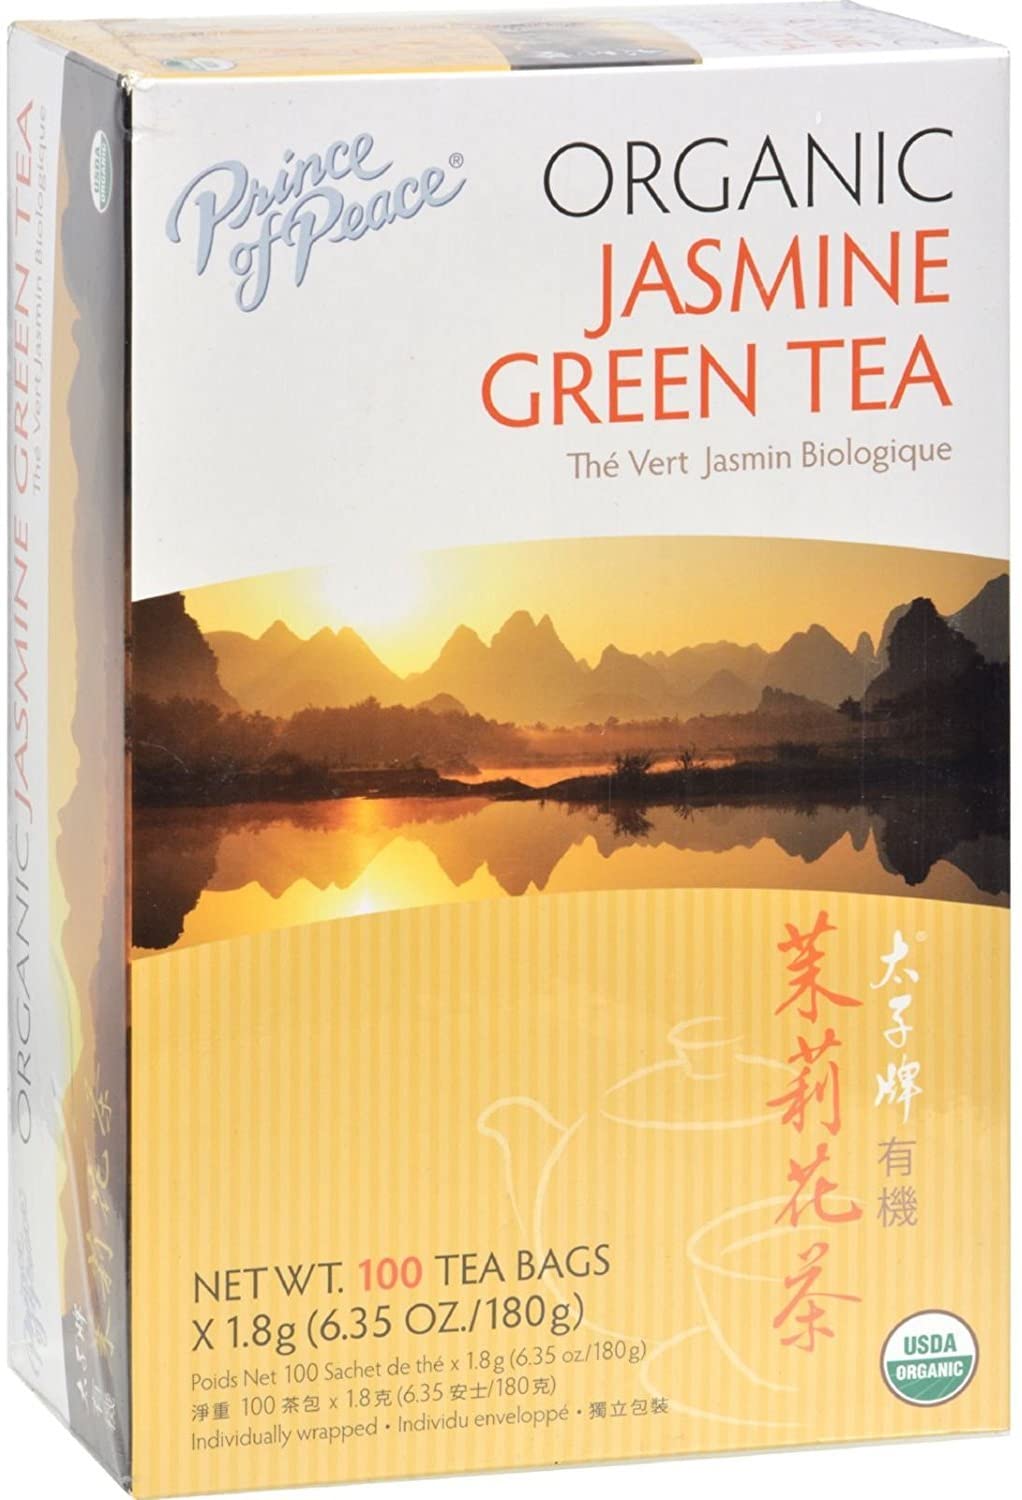 Prince of Peace Organic Jasmine Green Tea 100 Bags